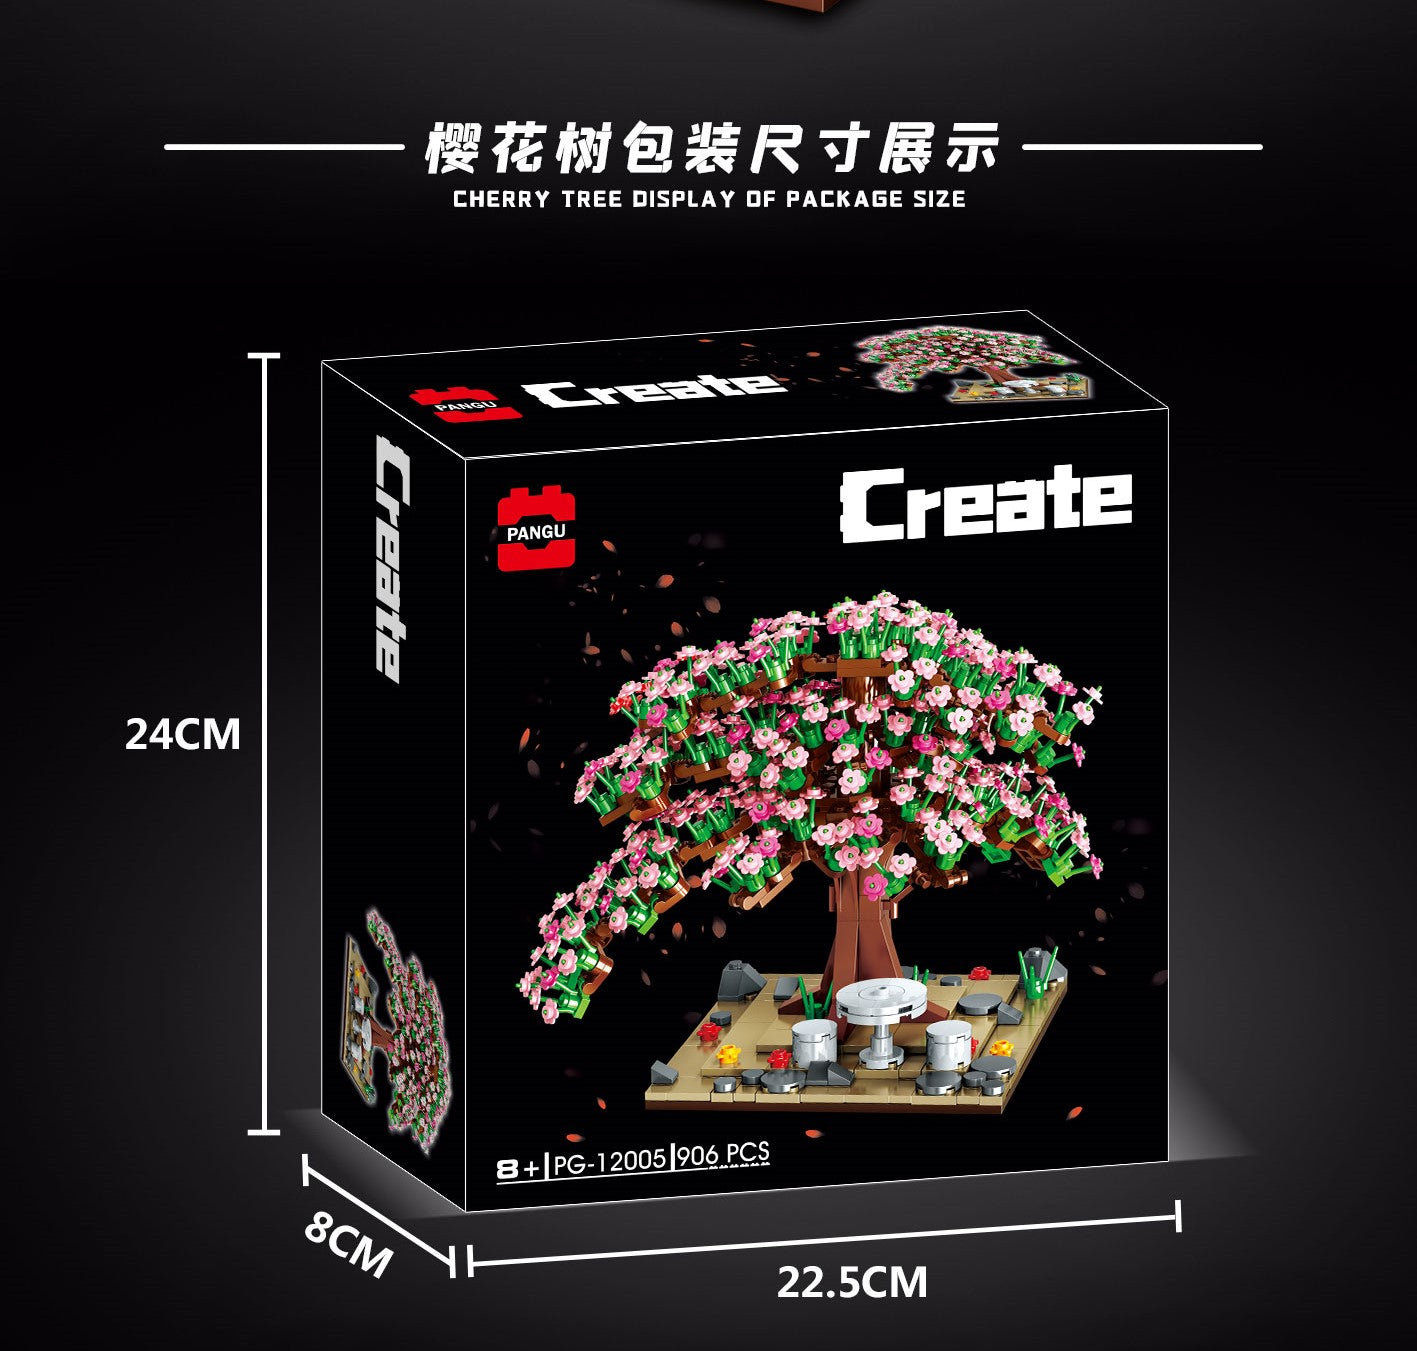 LEGO® Bonsai Tree  10281 – BrickMeUpScottie